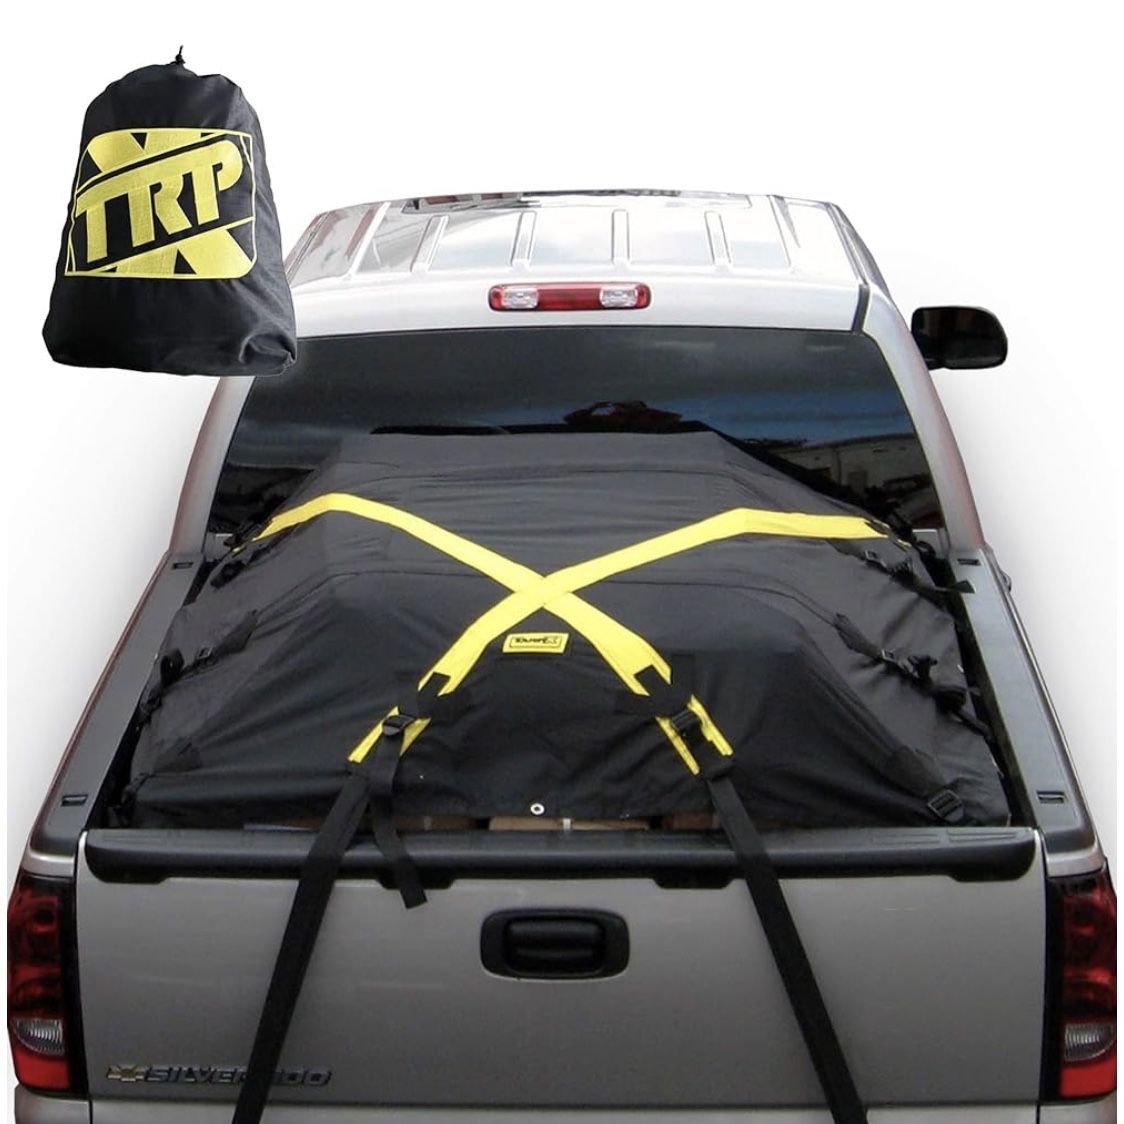 TarpX brand - Cargo Cover System